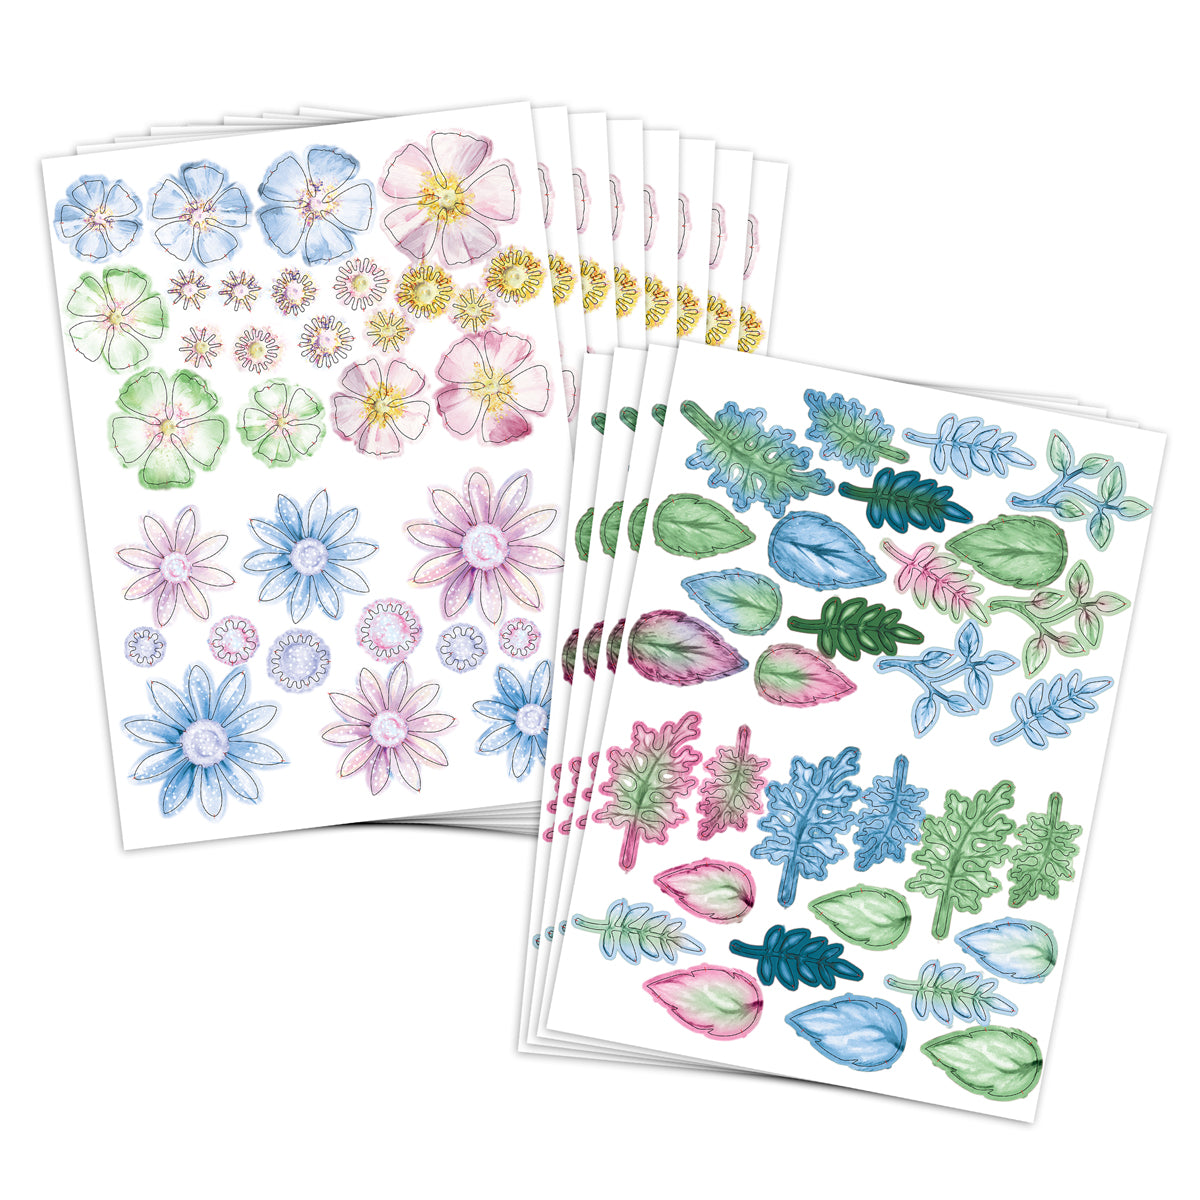 Icy Watercolour Die Cut Flowers & Leaves (12 sheets)